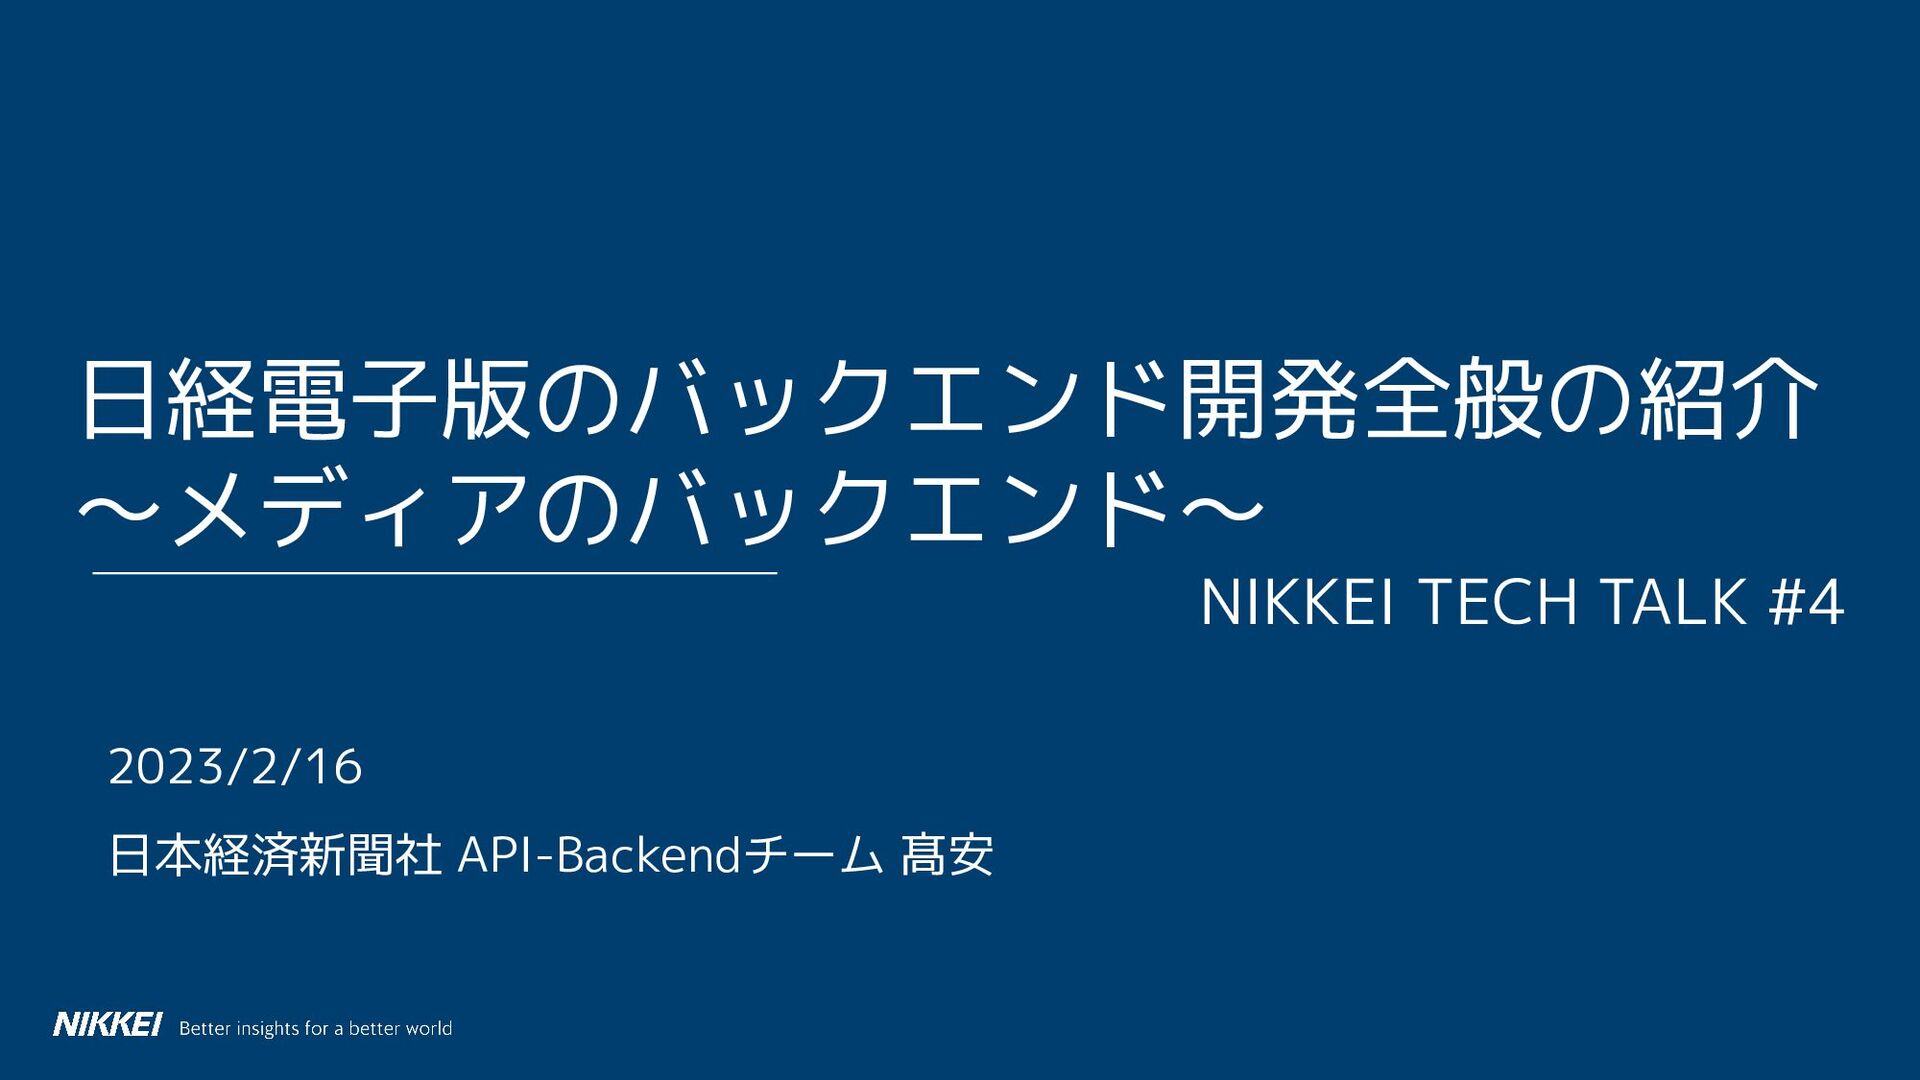 NIKKEI Tech Talk #4 日経電子版のバックエンド開発全般の紹介/nikkei-tech-talk-20230216-1